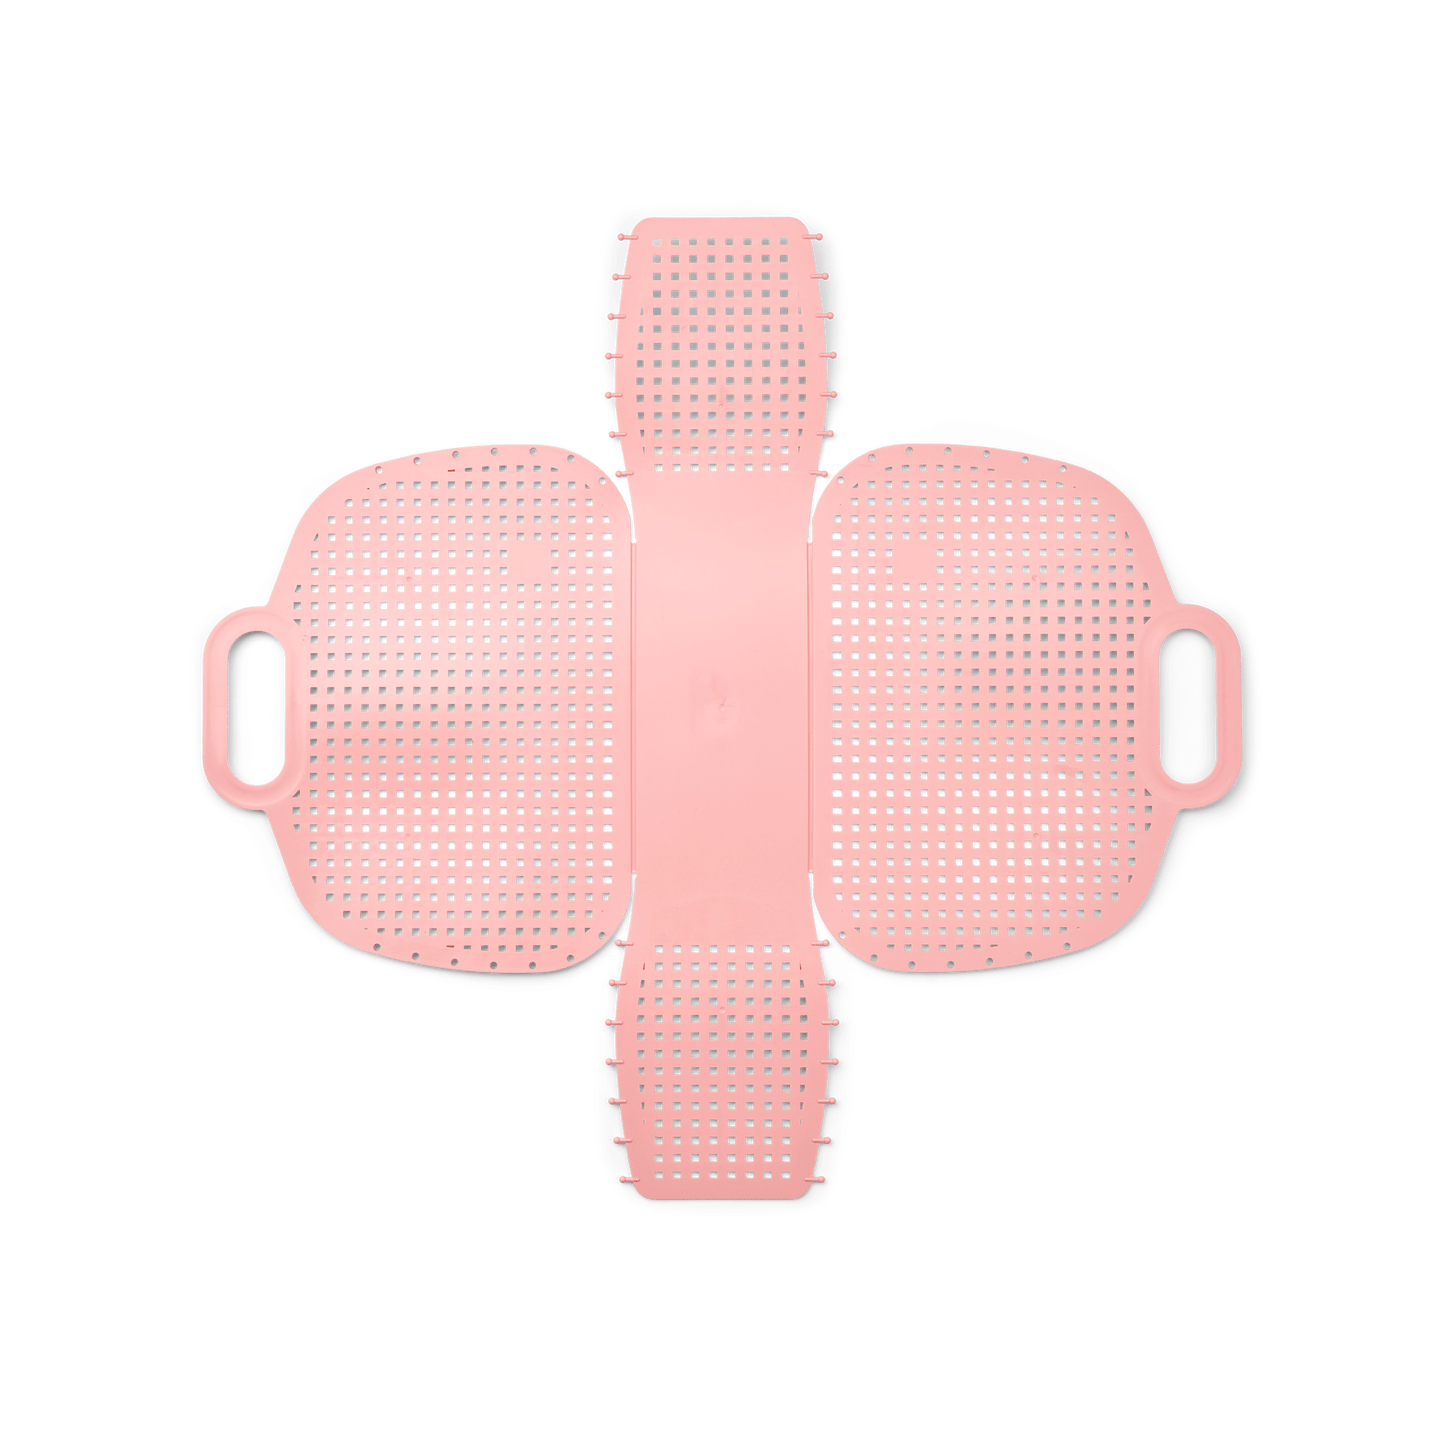 ADELINE BASKET Korbtasche | Pink Icing